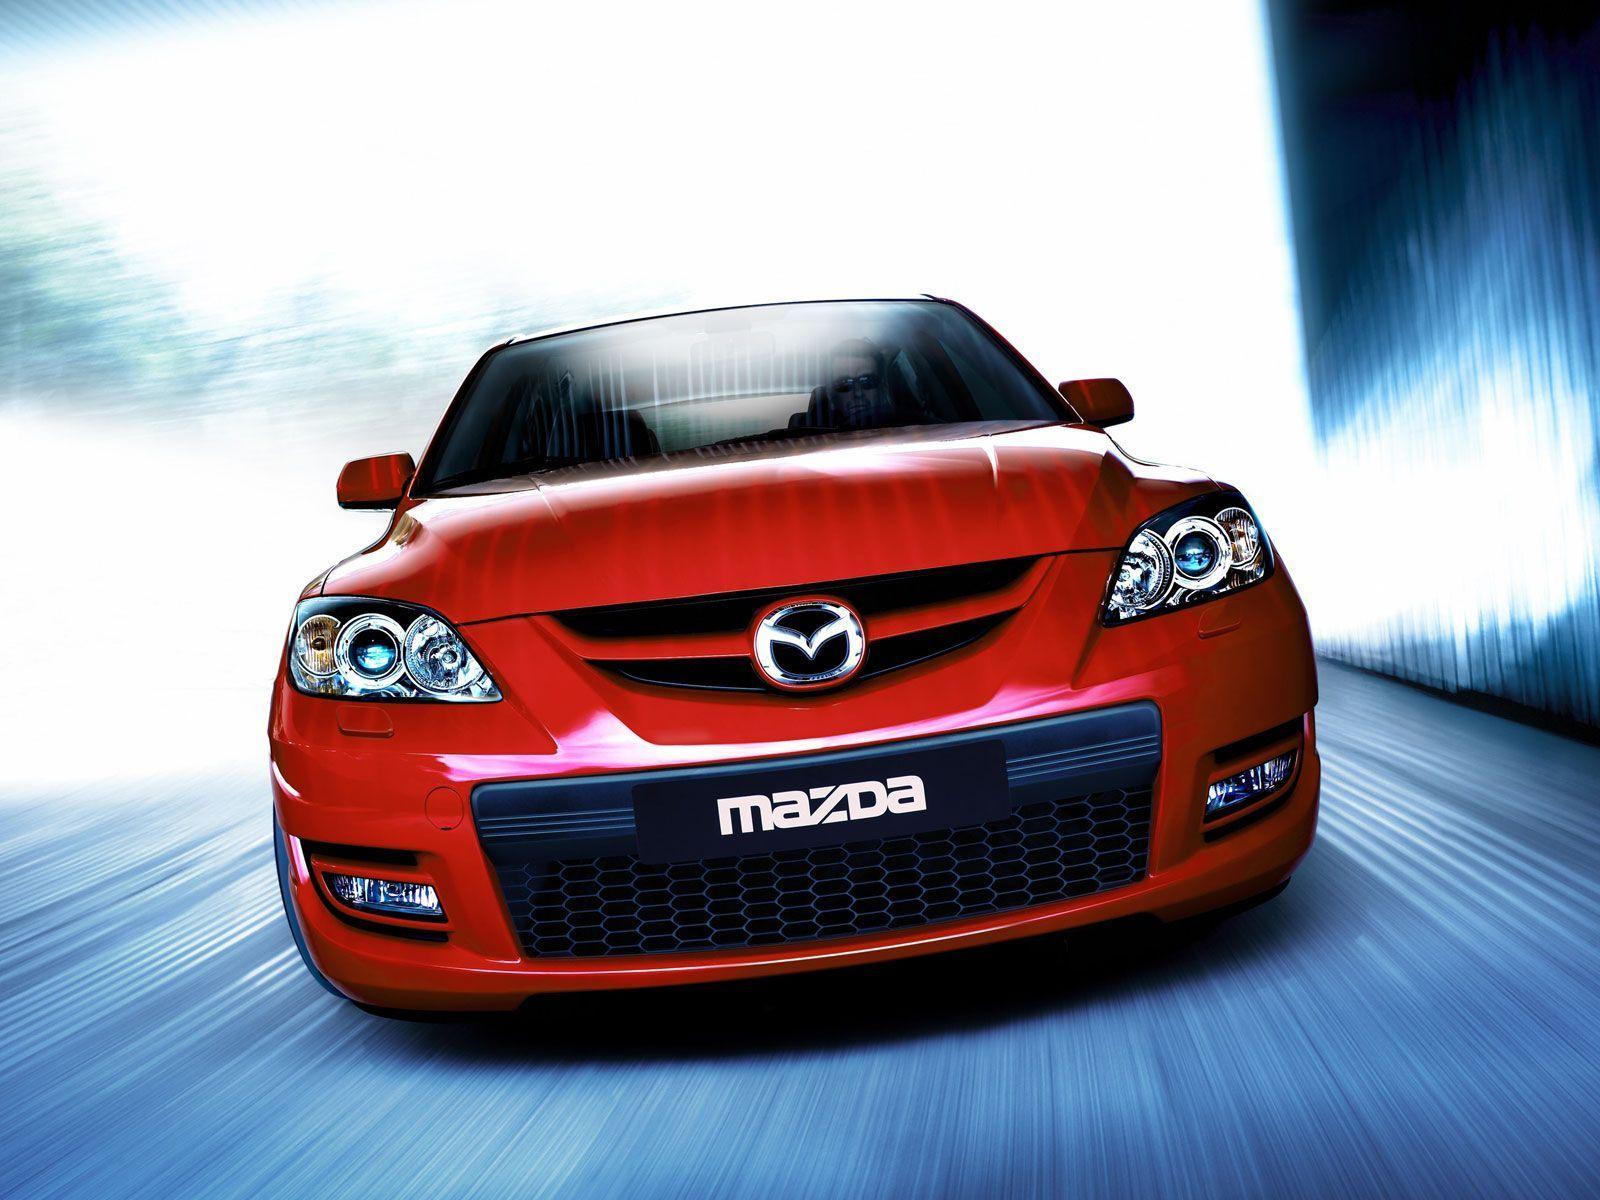 MazdaSpeed Mazda 3 MPS picture # 31900. MazdaSpeed photo gallery